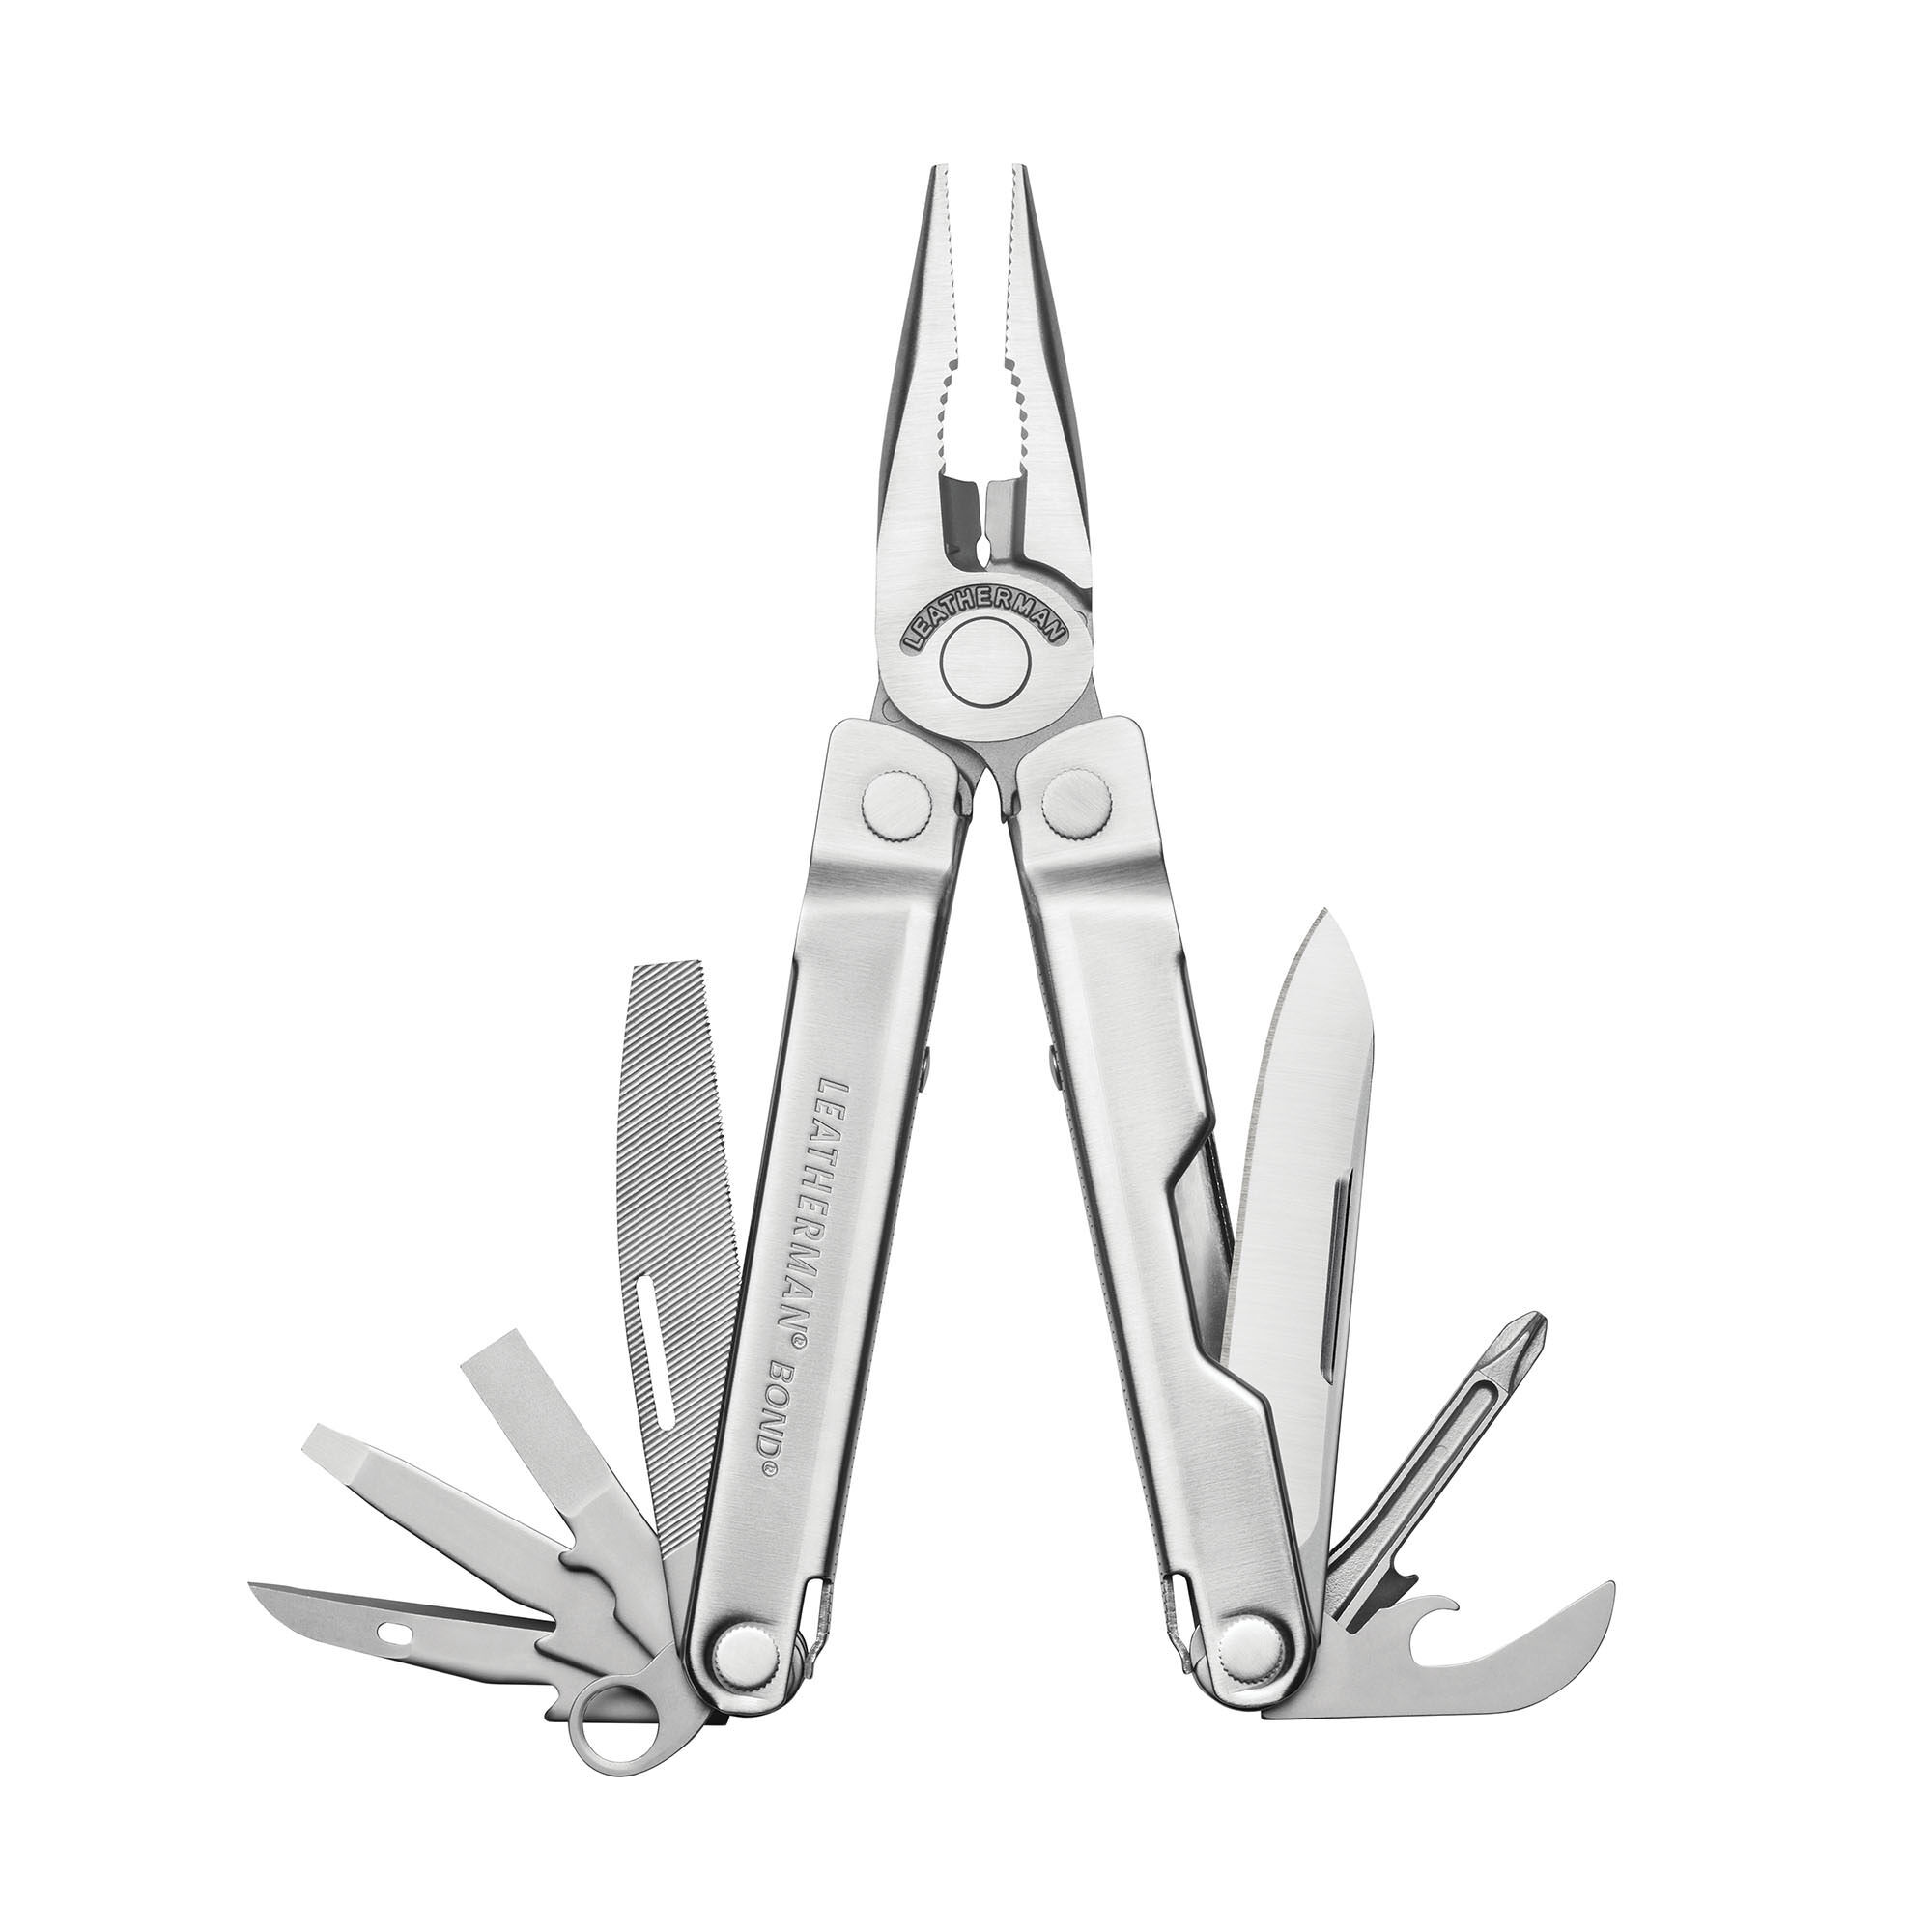 Bond | Everyday Carry Multi-tools | Leatherman Tool Group​​